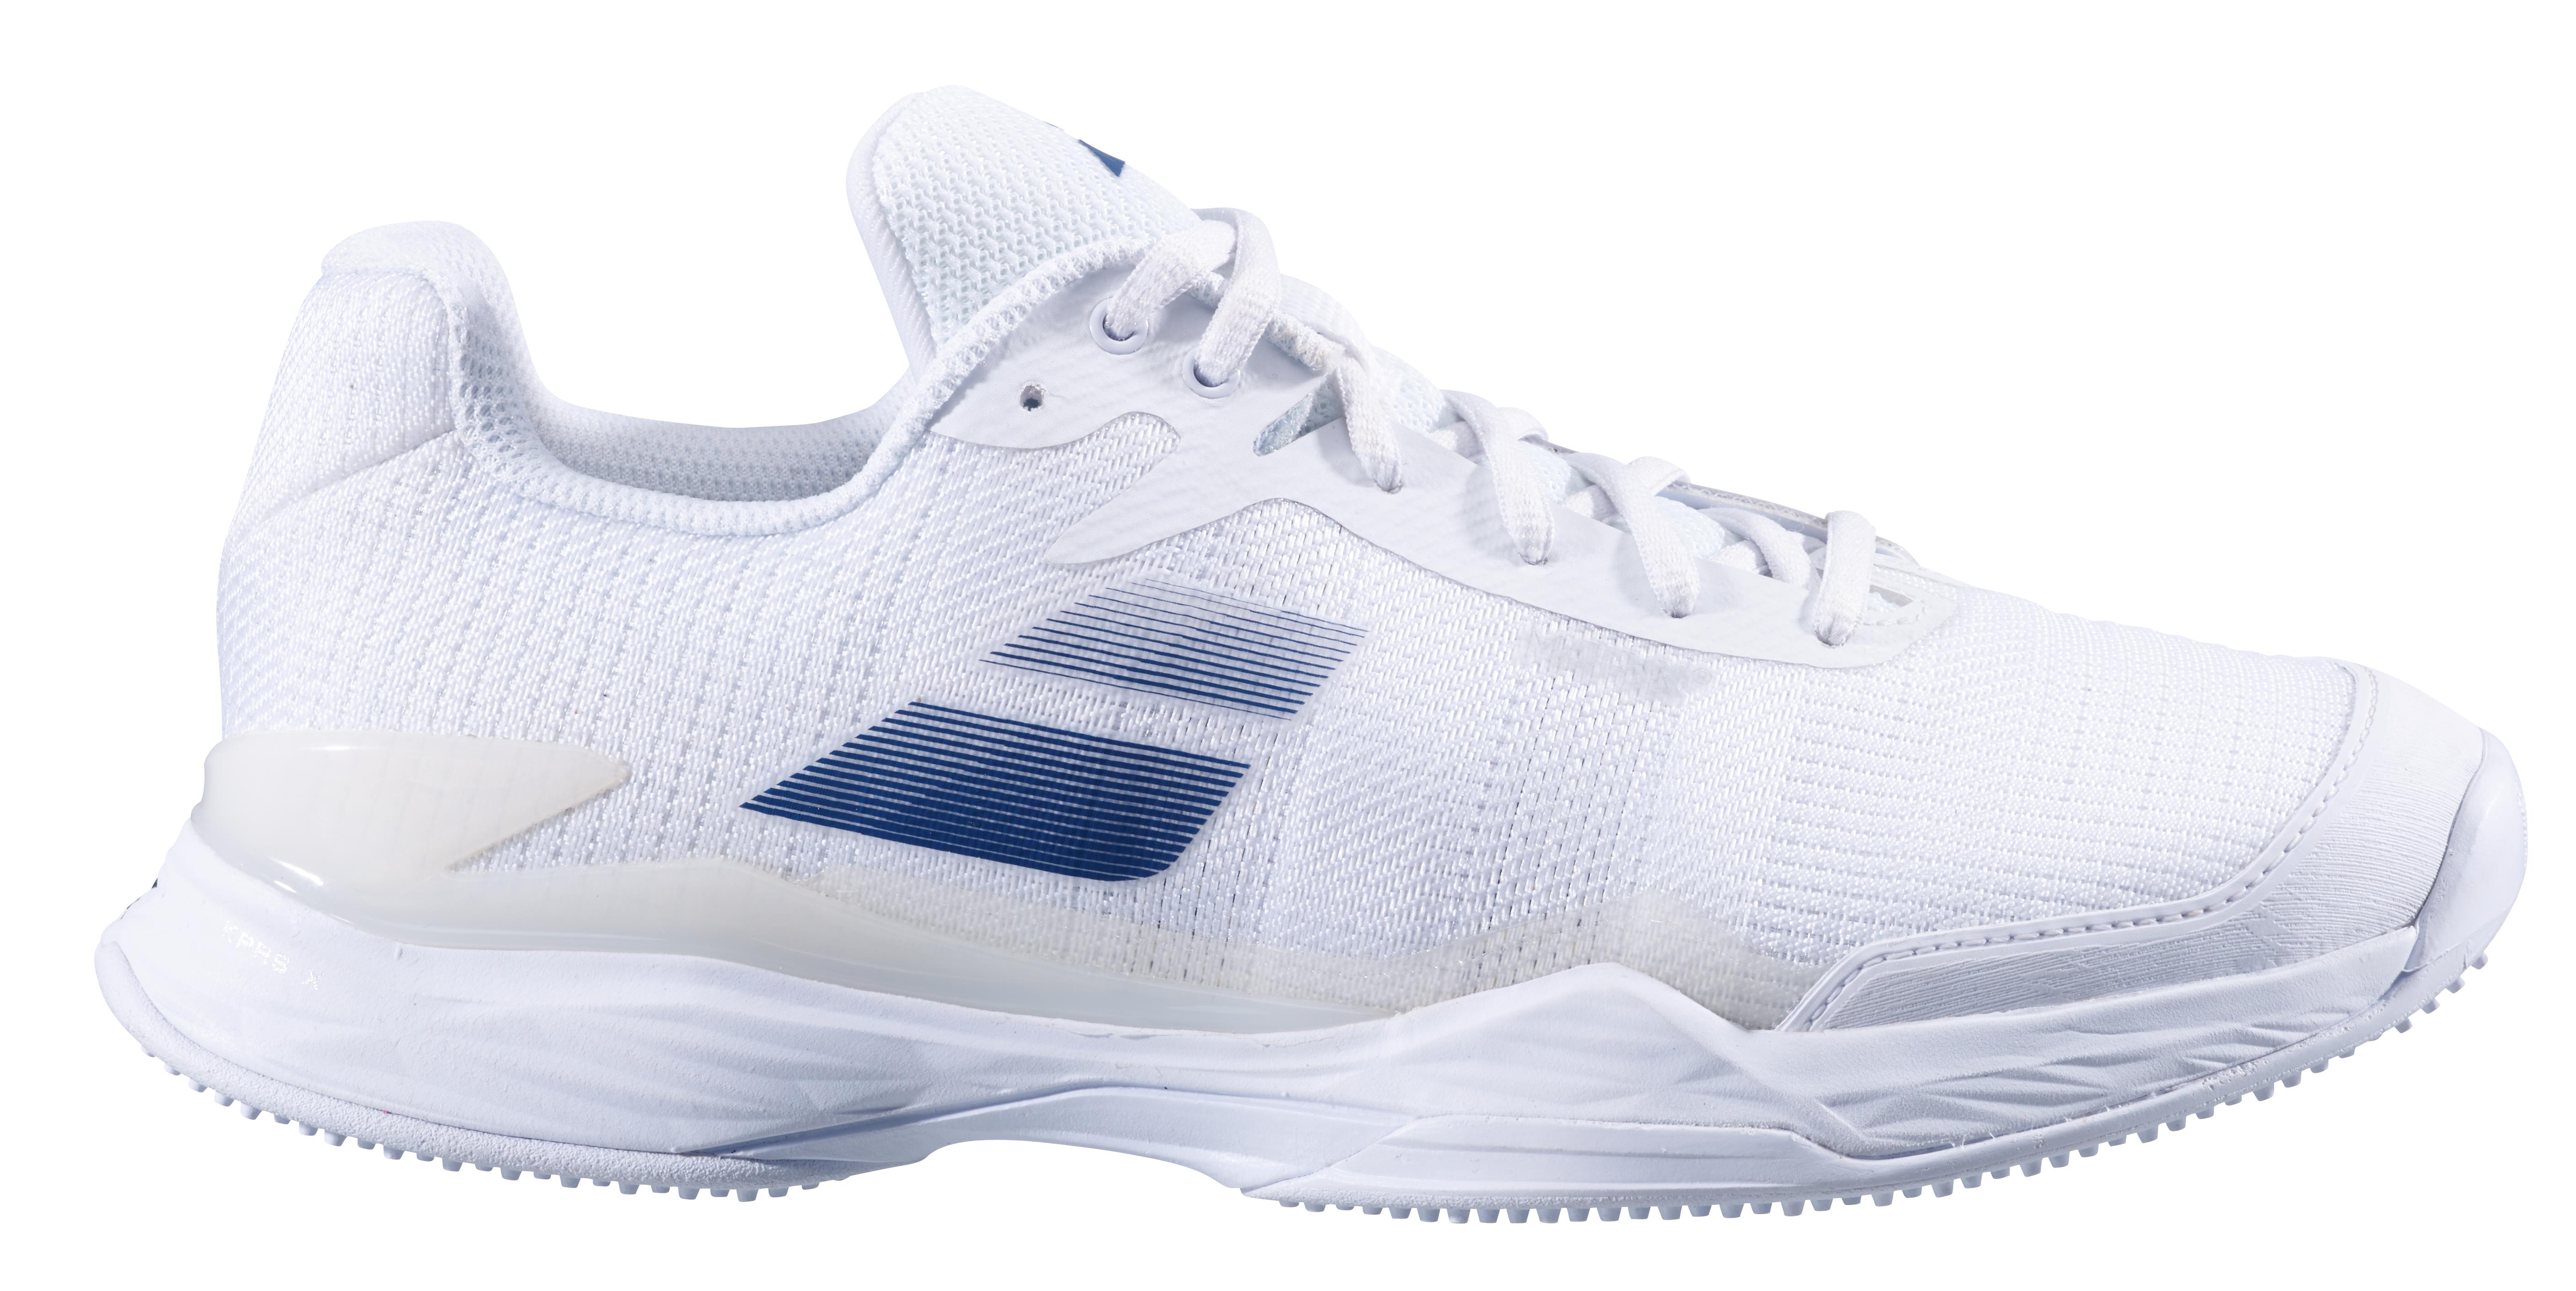 Babolat Men's Jet Mach II Grass Court Tennis Shoes (White/Estate Blue